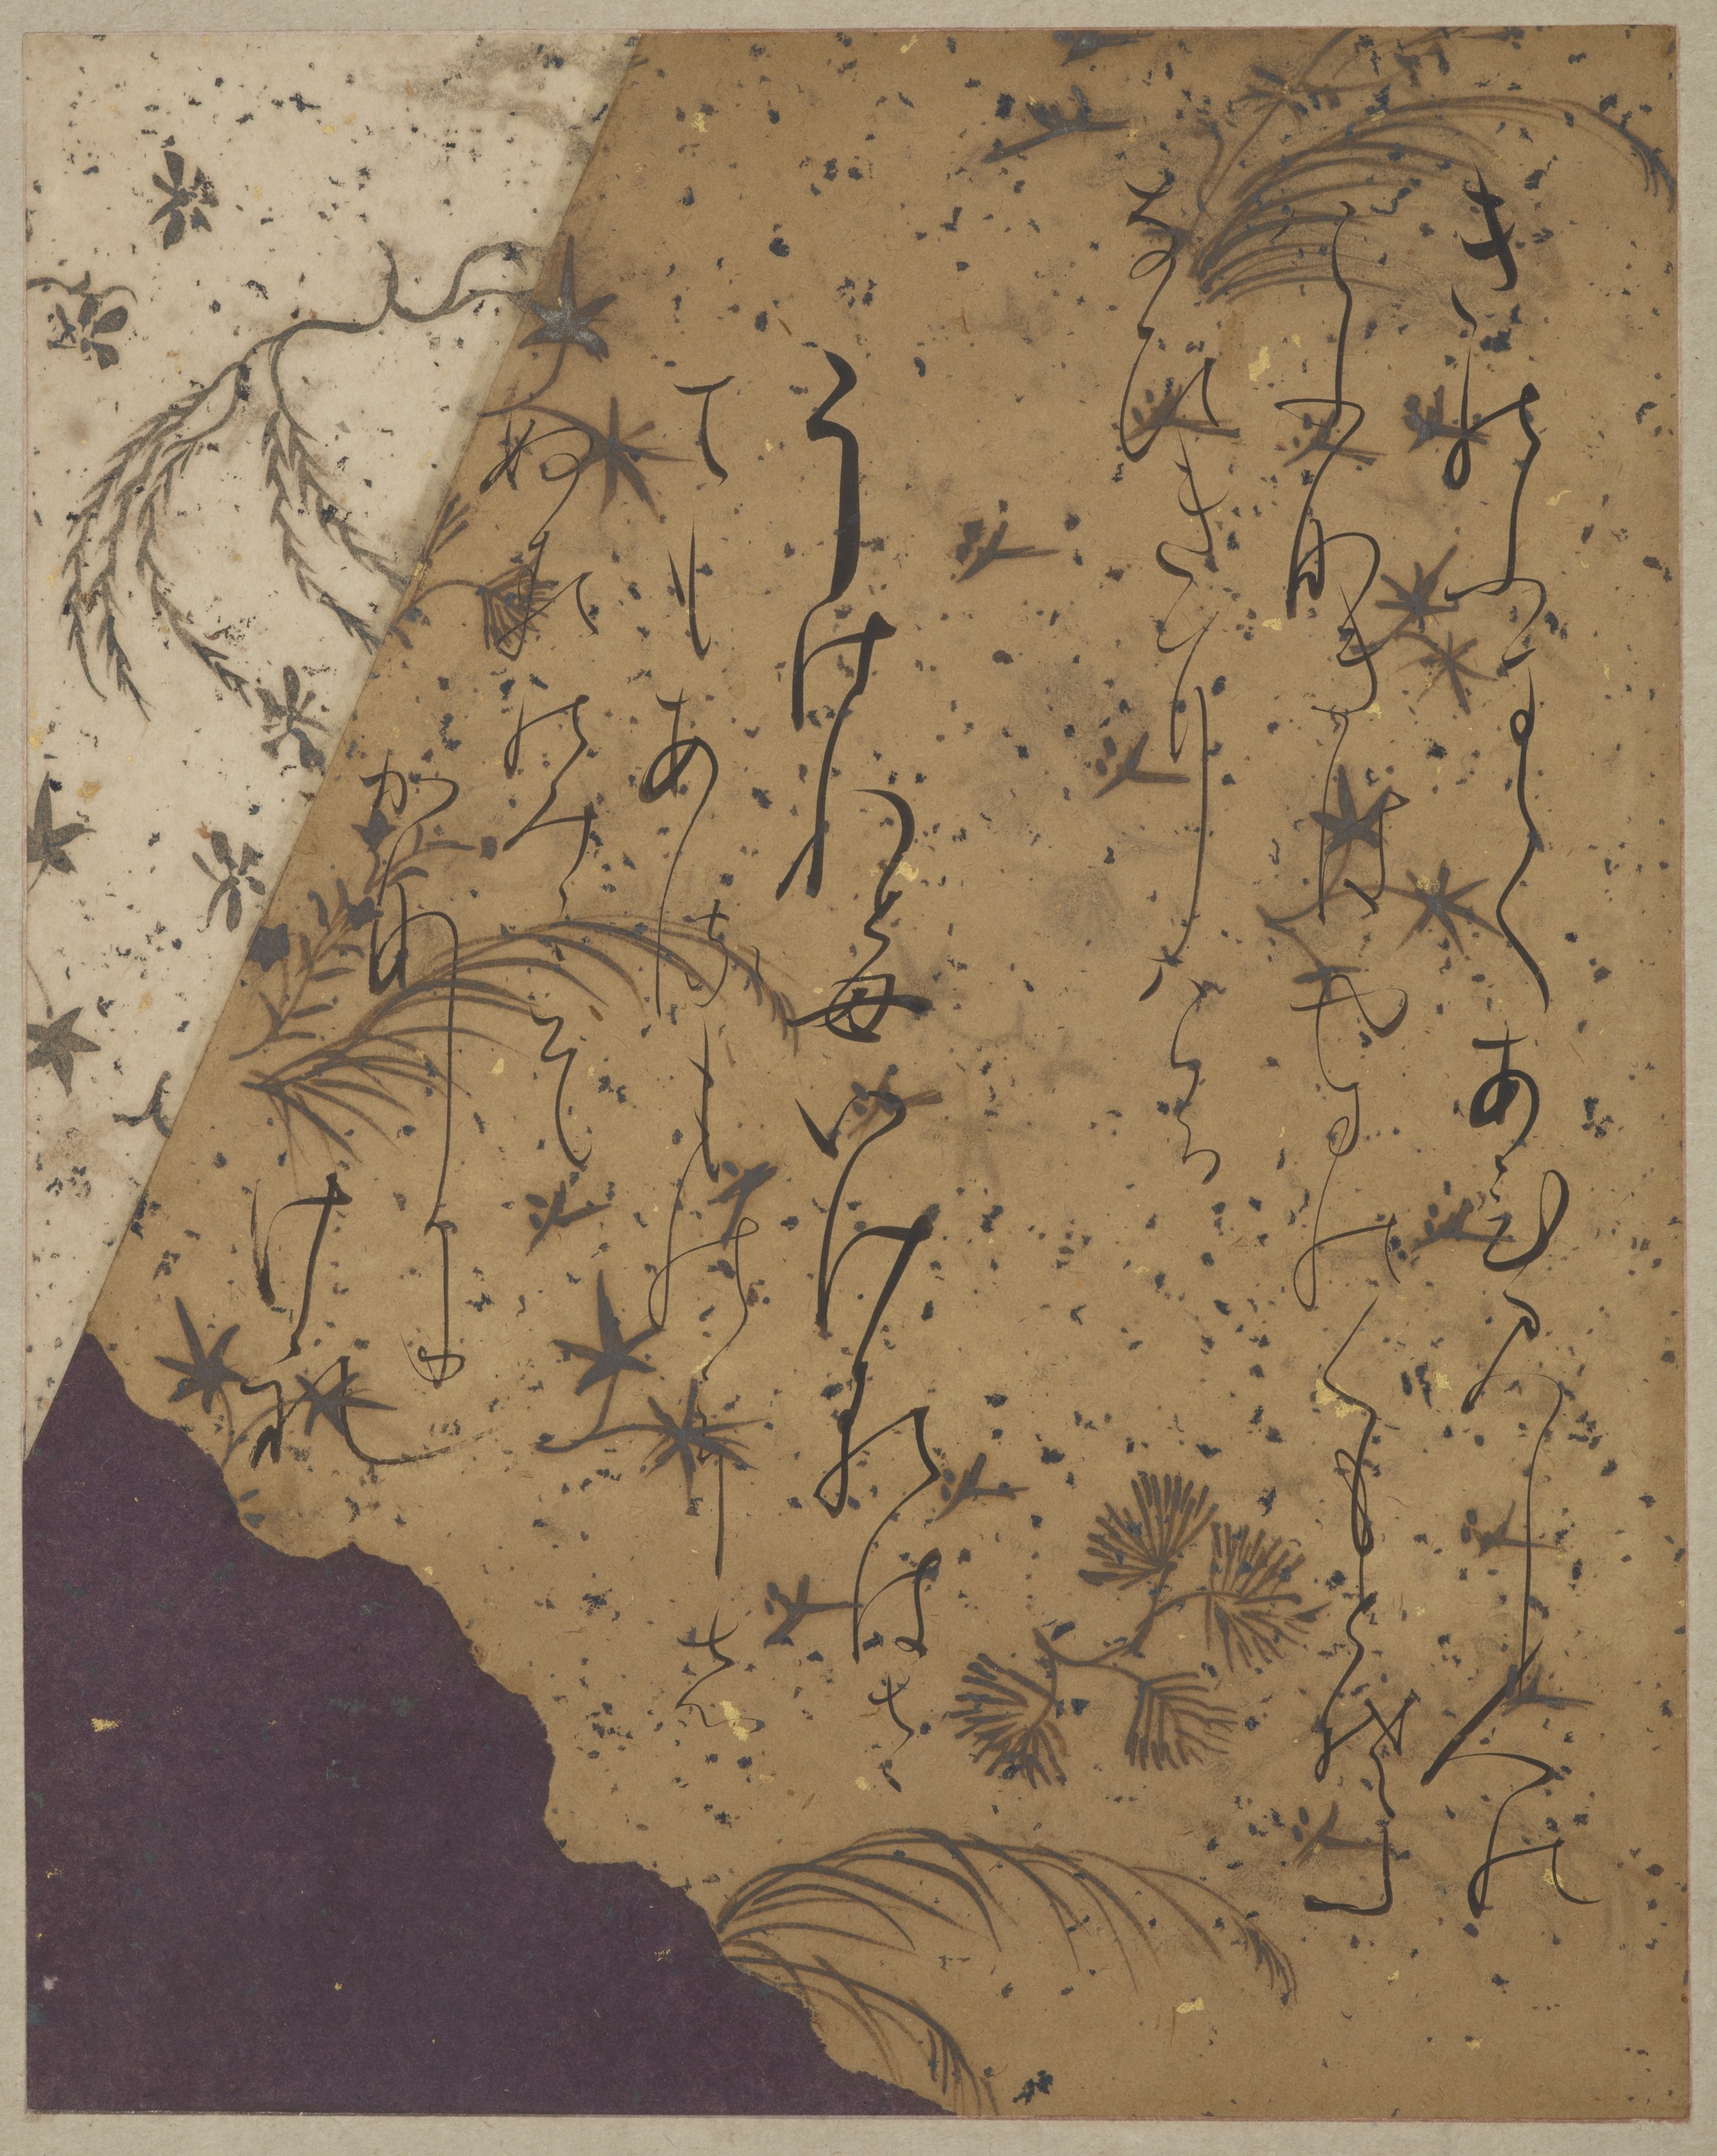 Página da Ishiyama-gire by Fujiwara no Sadanobu (attrib.) - Período Heian, inícios do século XII - 131.8 x 44 cm 